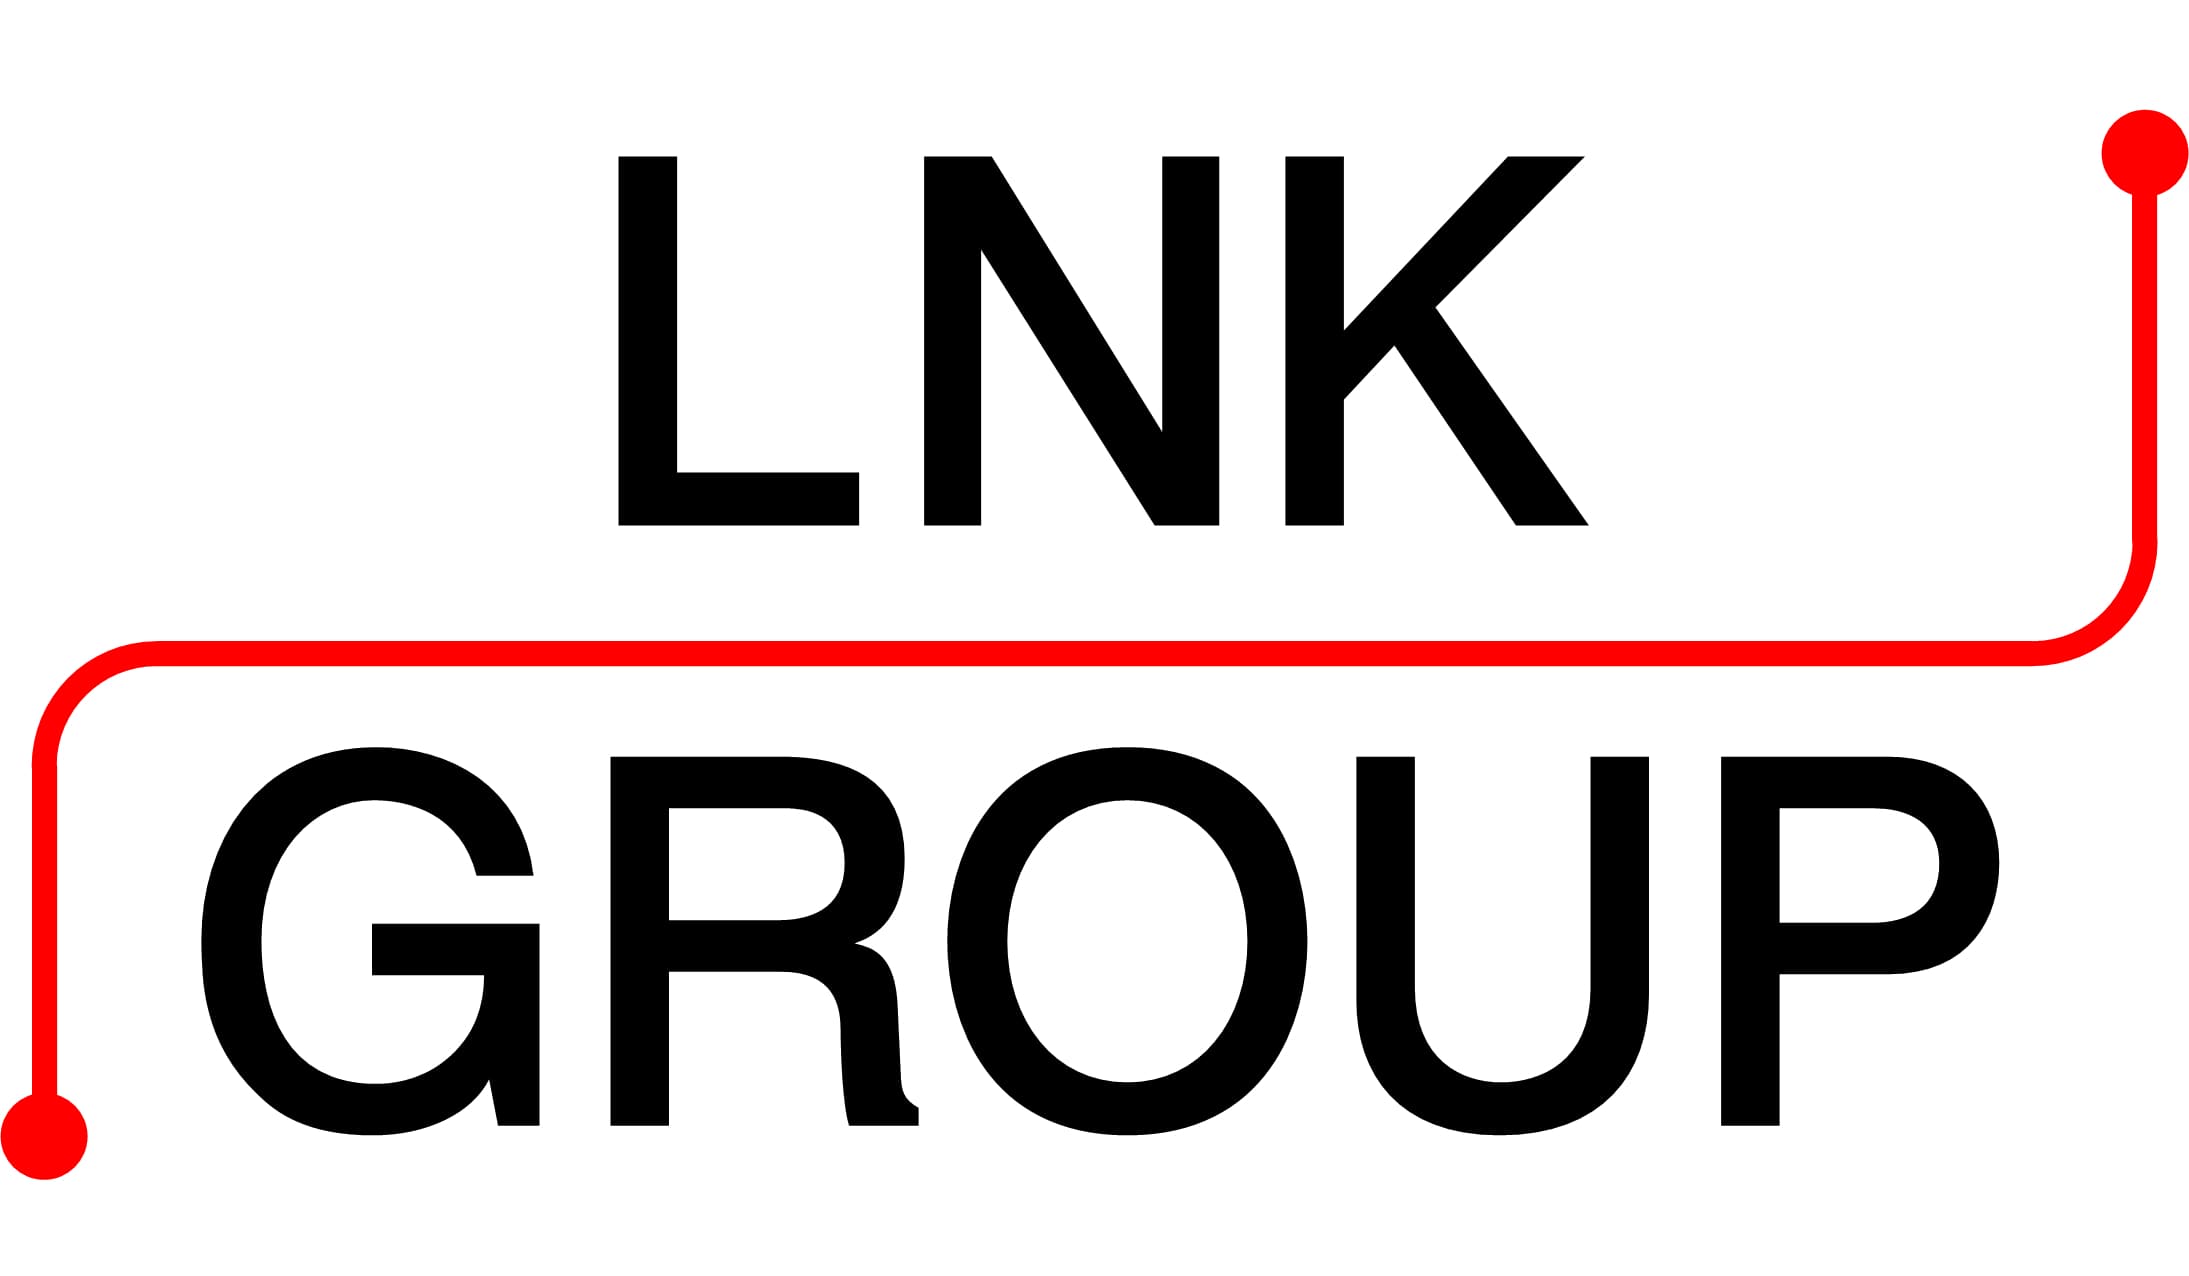 LNK GROUP